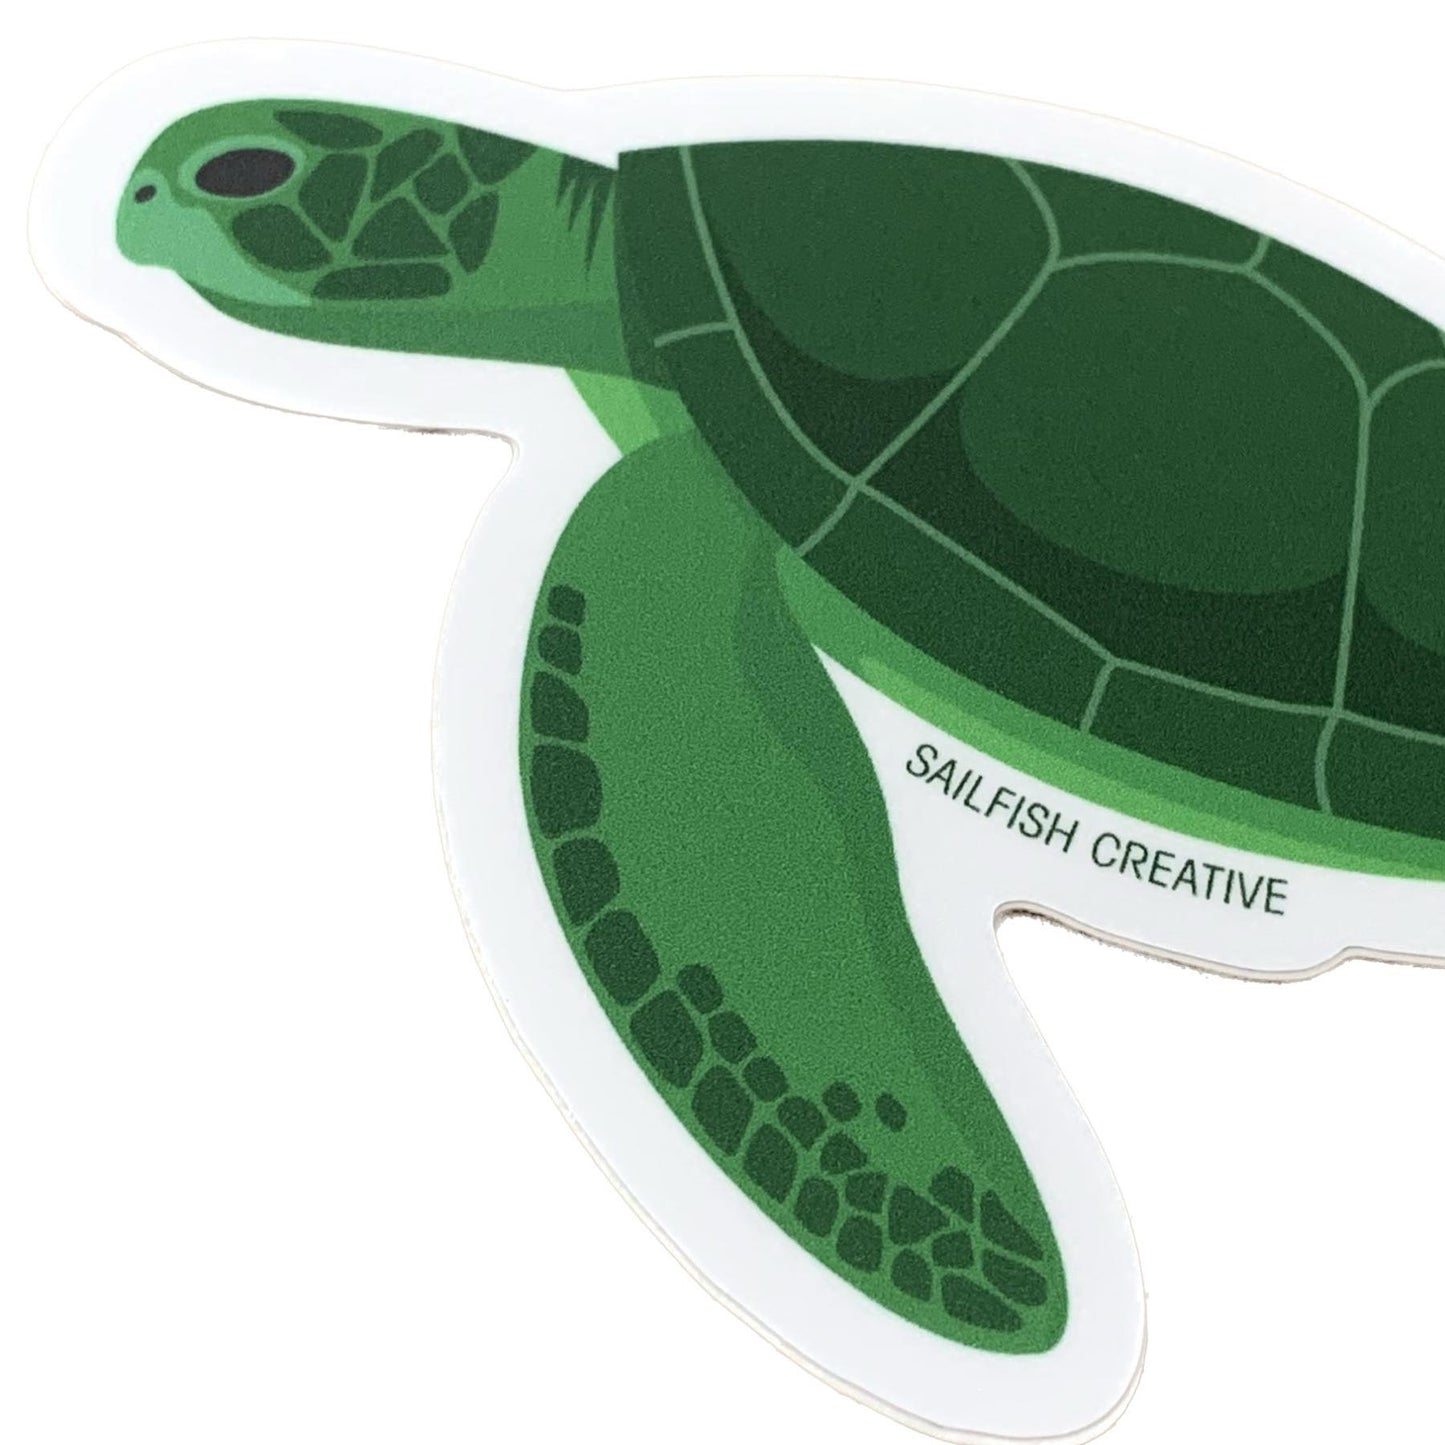 SAILFISH CREATIVE- "Green Turtle" Vinyl Sticker